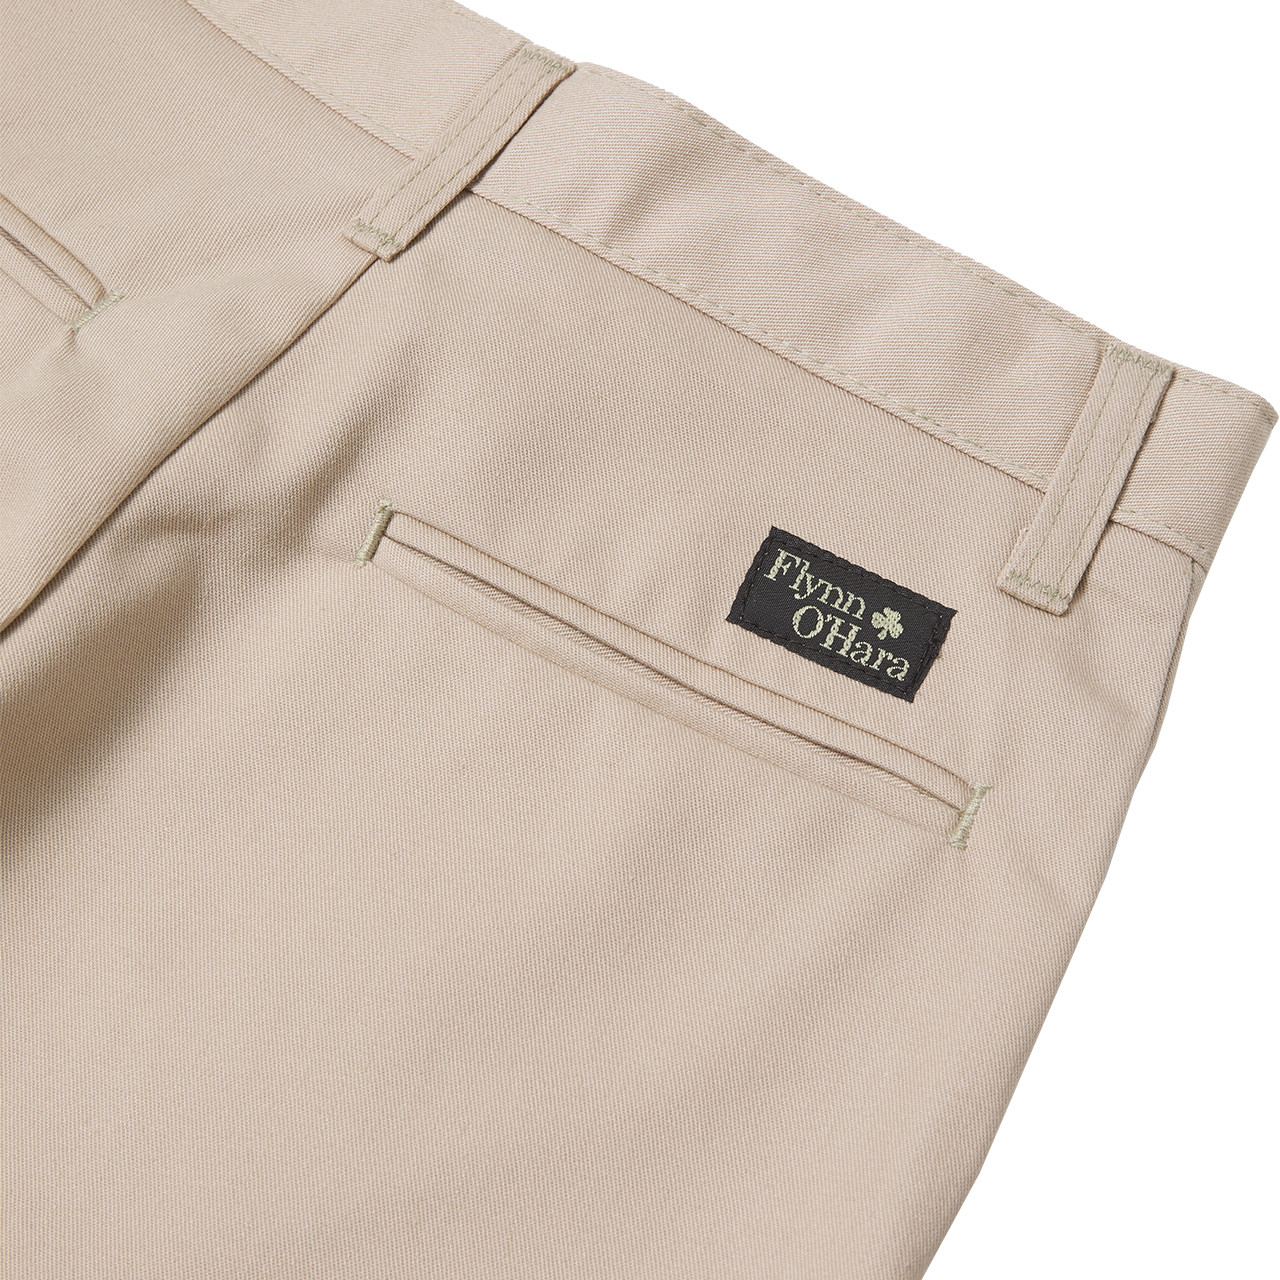 Twill Pants [NC060-TWILL-KHAKI] - FlynnO'Hara Uniforms